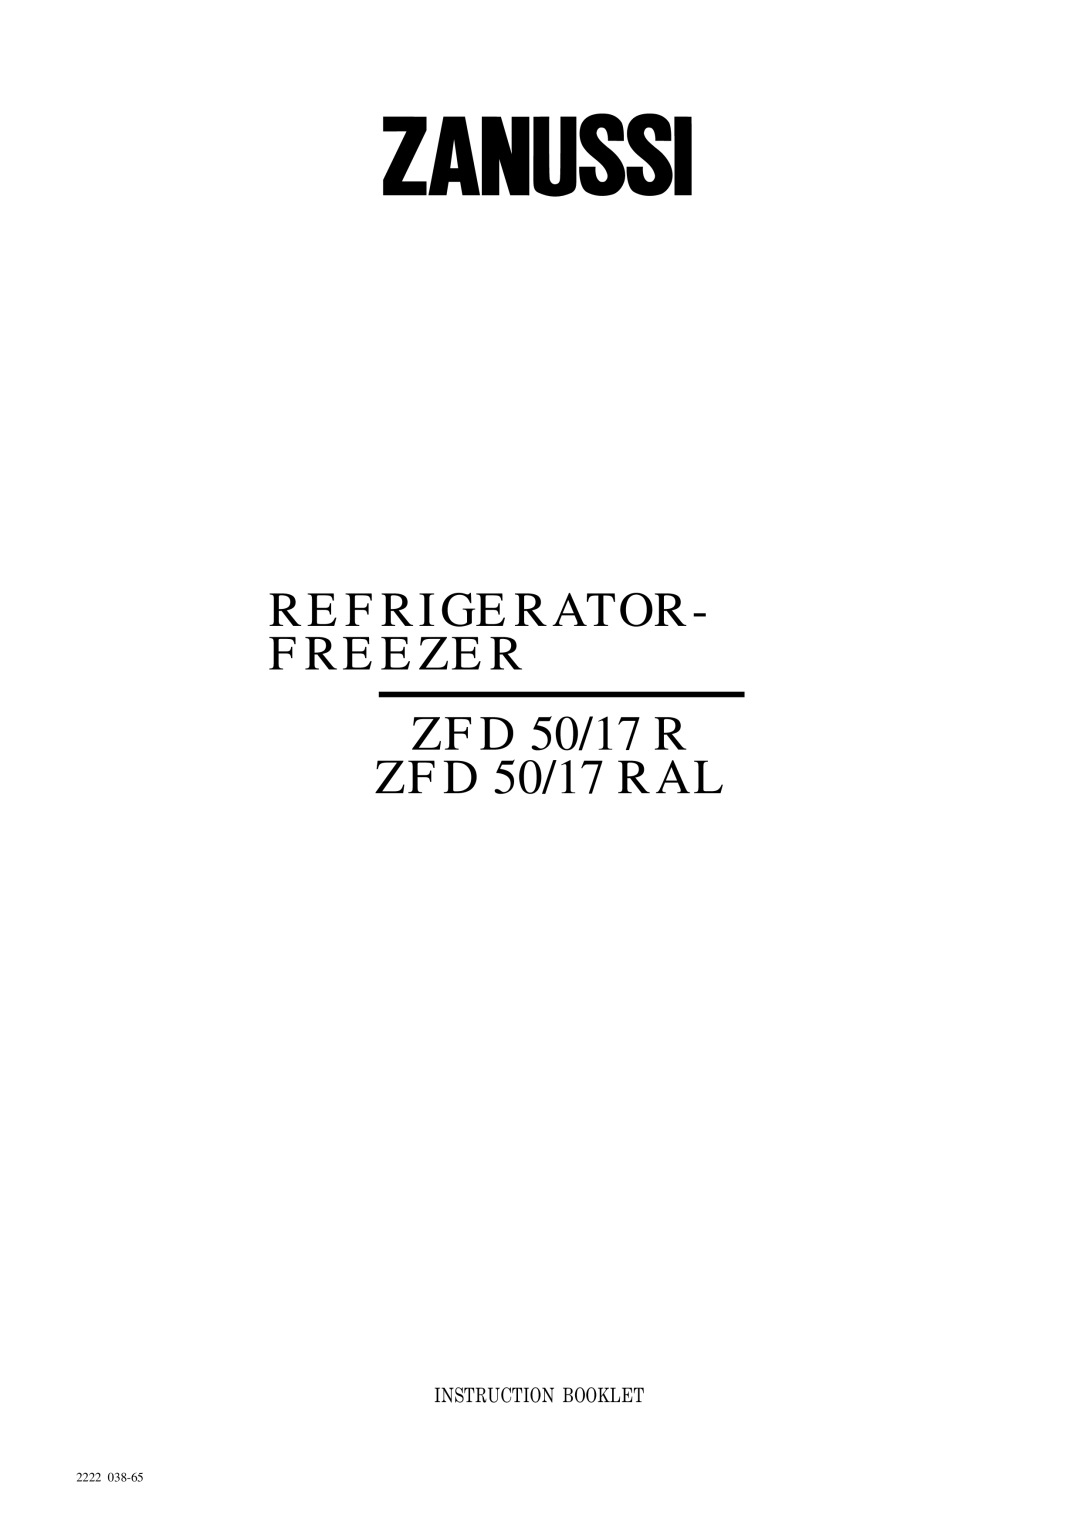 Zanussi manual REFRIGERATOR FREEZER ZFD 50/17 R ZFD 50/17 RAL, Instruction Booklet, 2222 